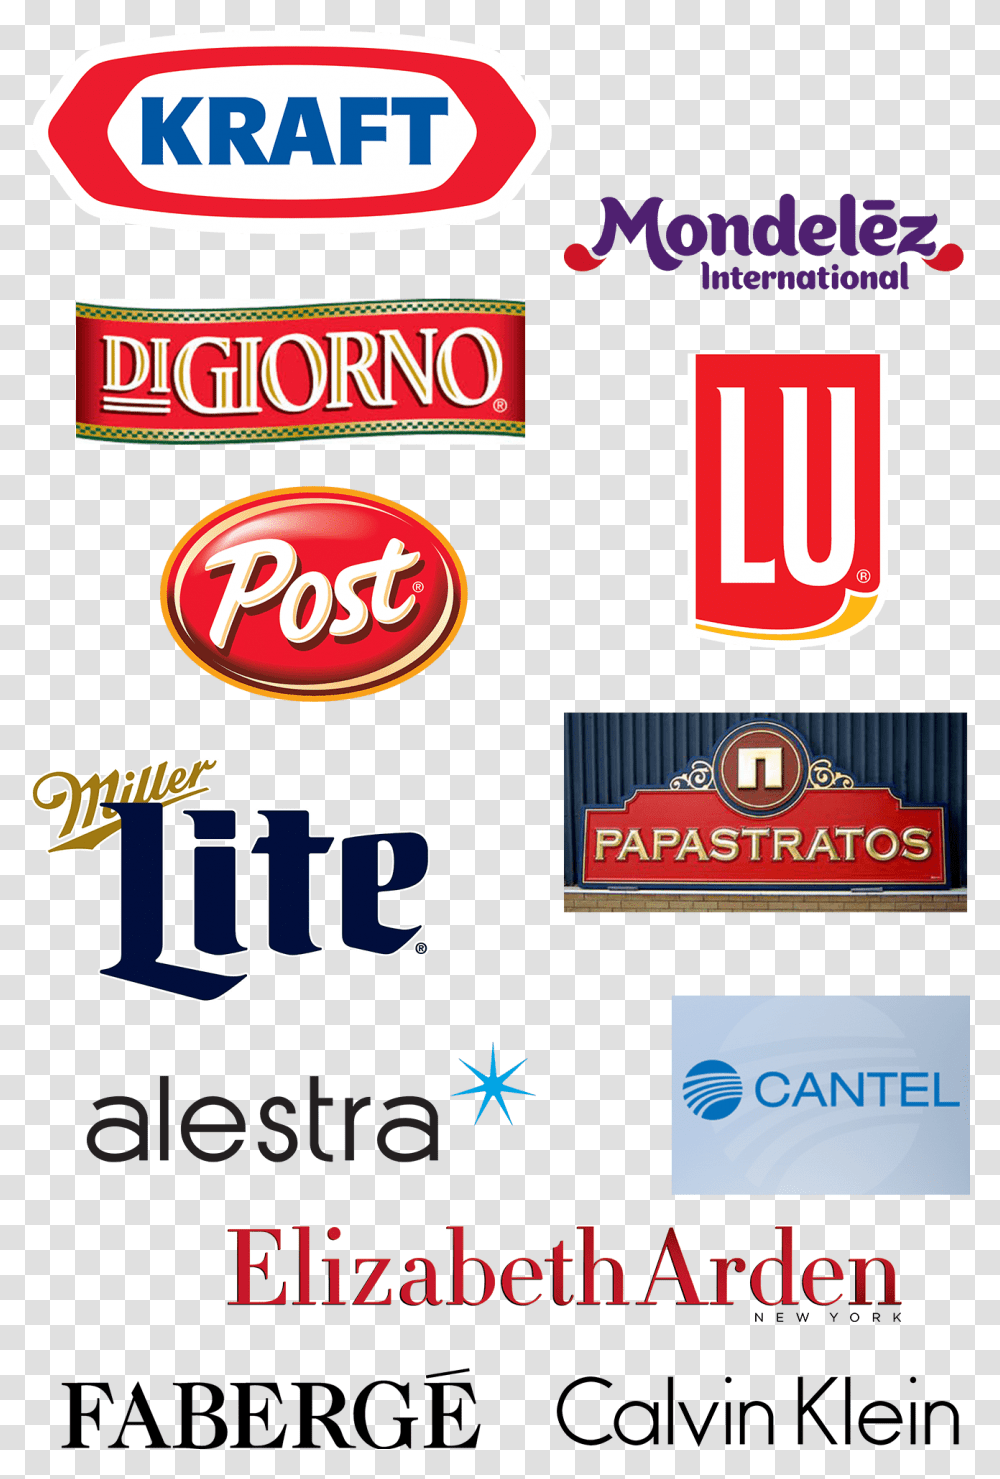 Split Of Kraft Into Separate Public Companies Poster, Logo, Label Transparent Png